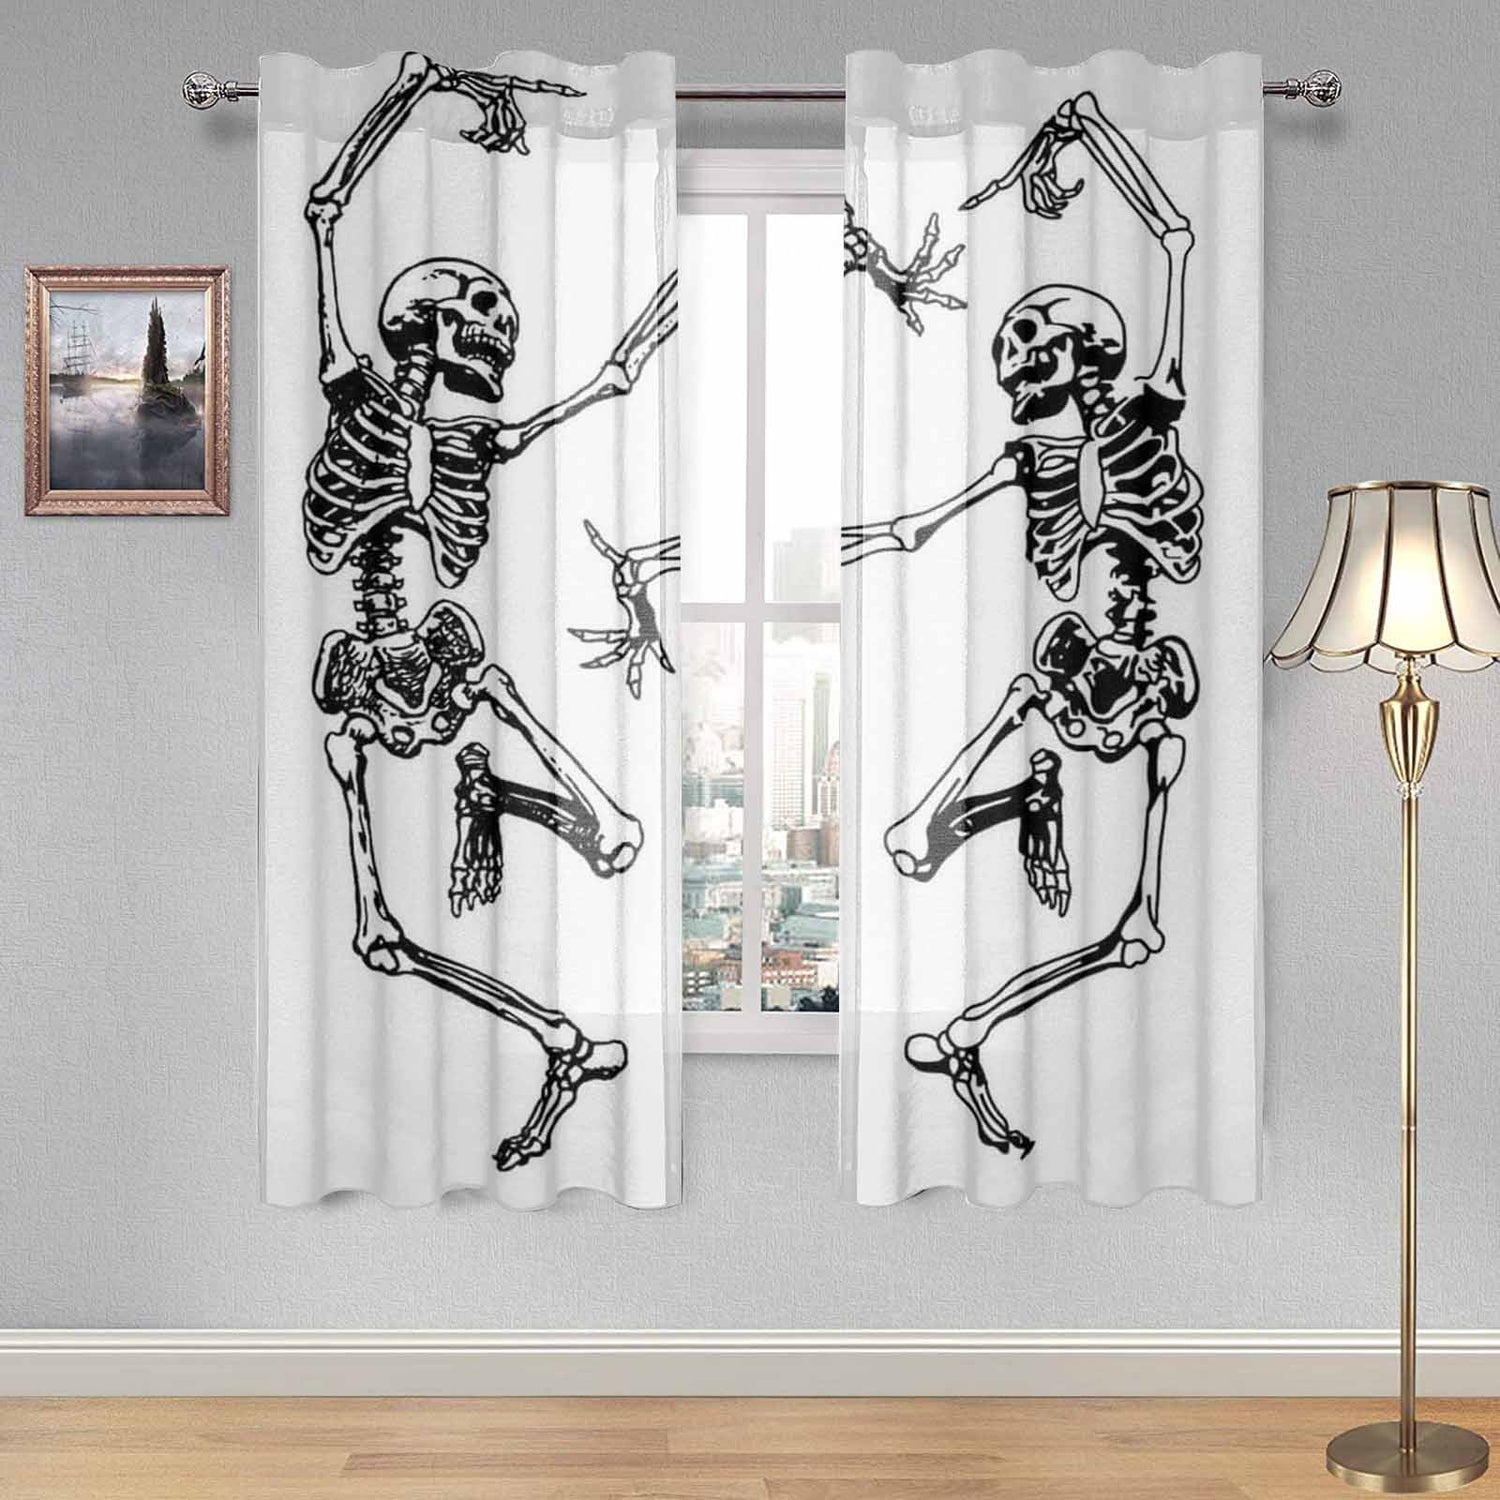 Kate McEnroe New York Sheer 2 - Panel Window Curtains in Monochrome Dancing SkeletonsWindow CurtainsDG1170274DXH7856D